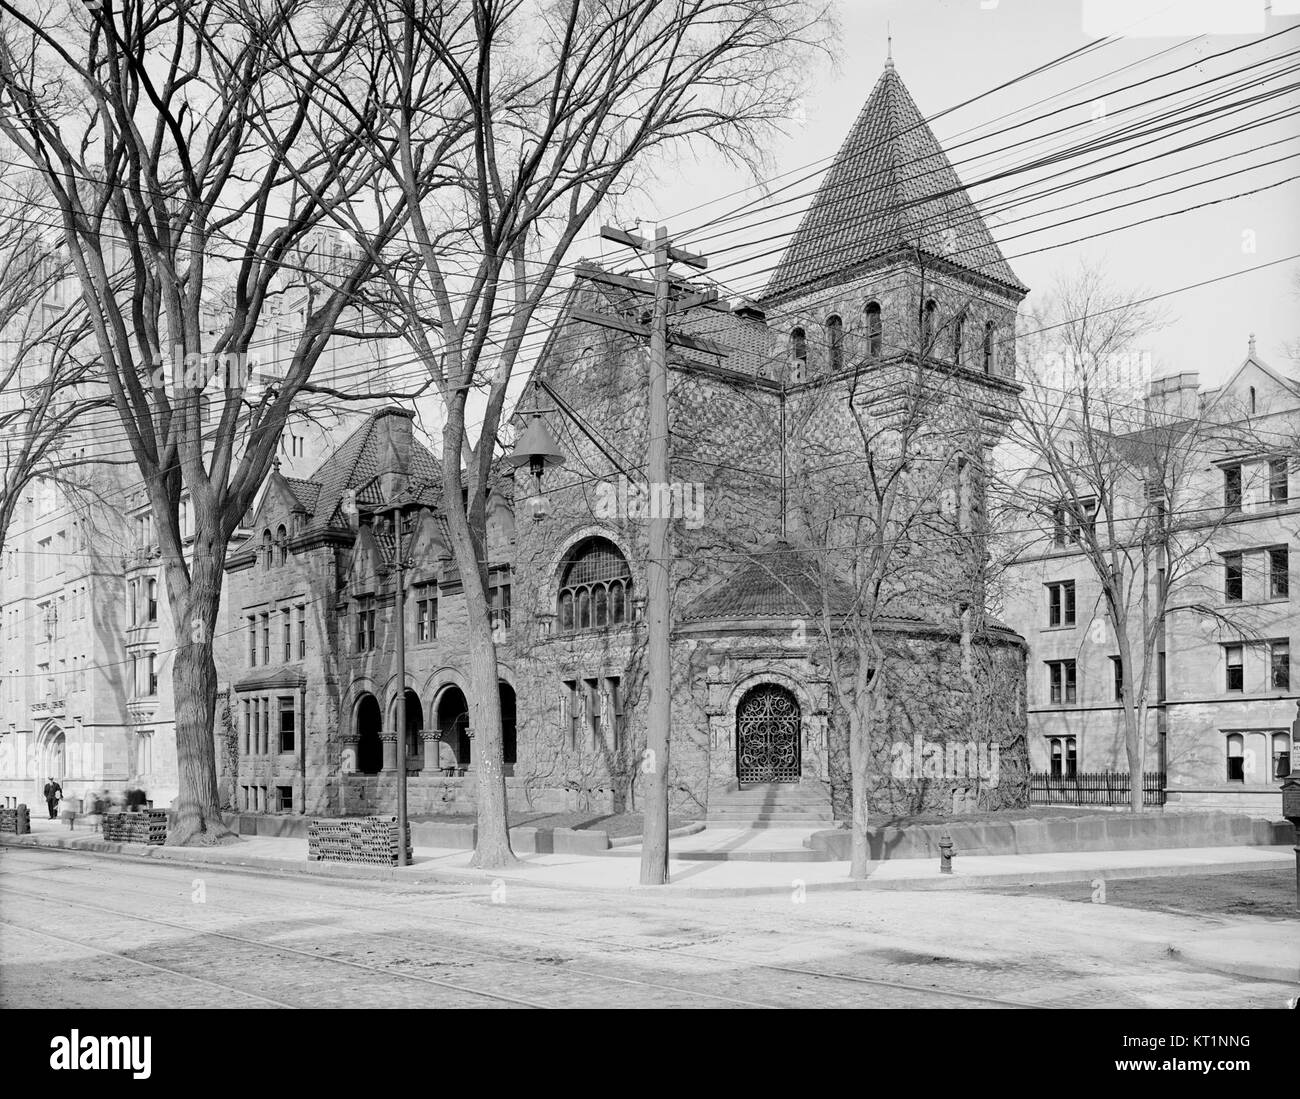 Delta Psi fraternity house, Yale University, New Haven, Conn. Banque D'Images